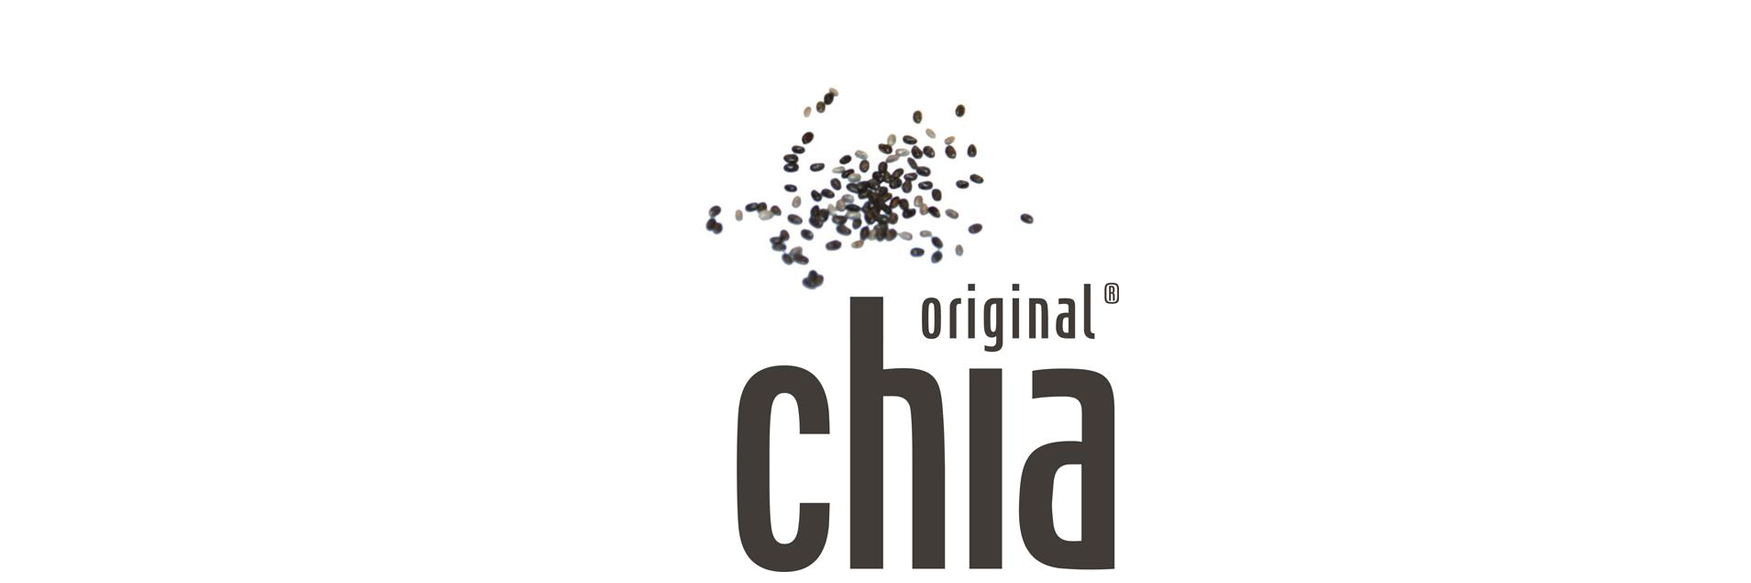 Original Chia